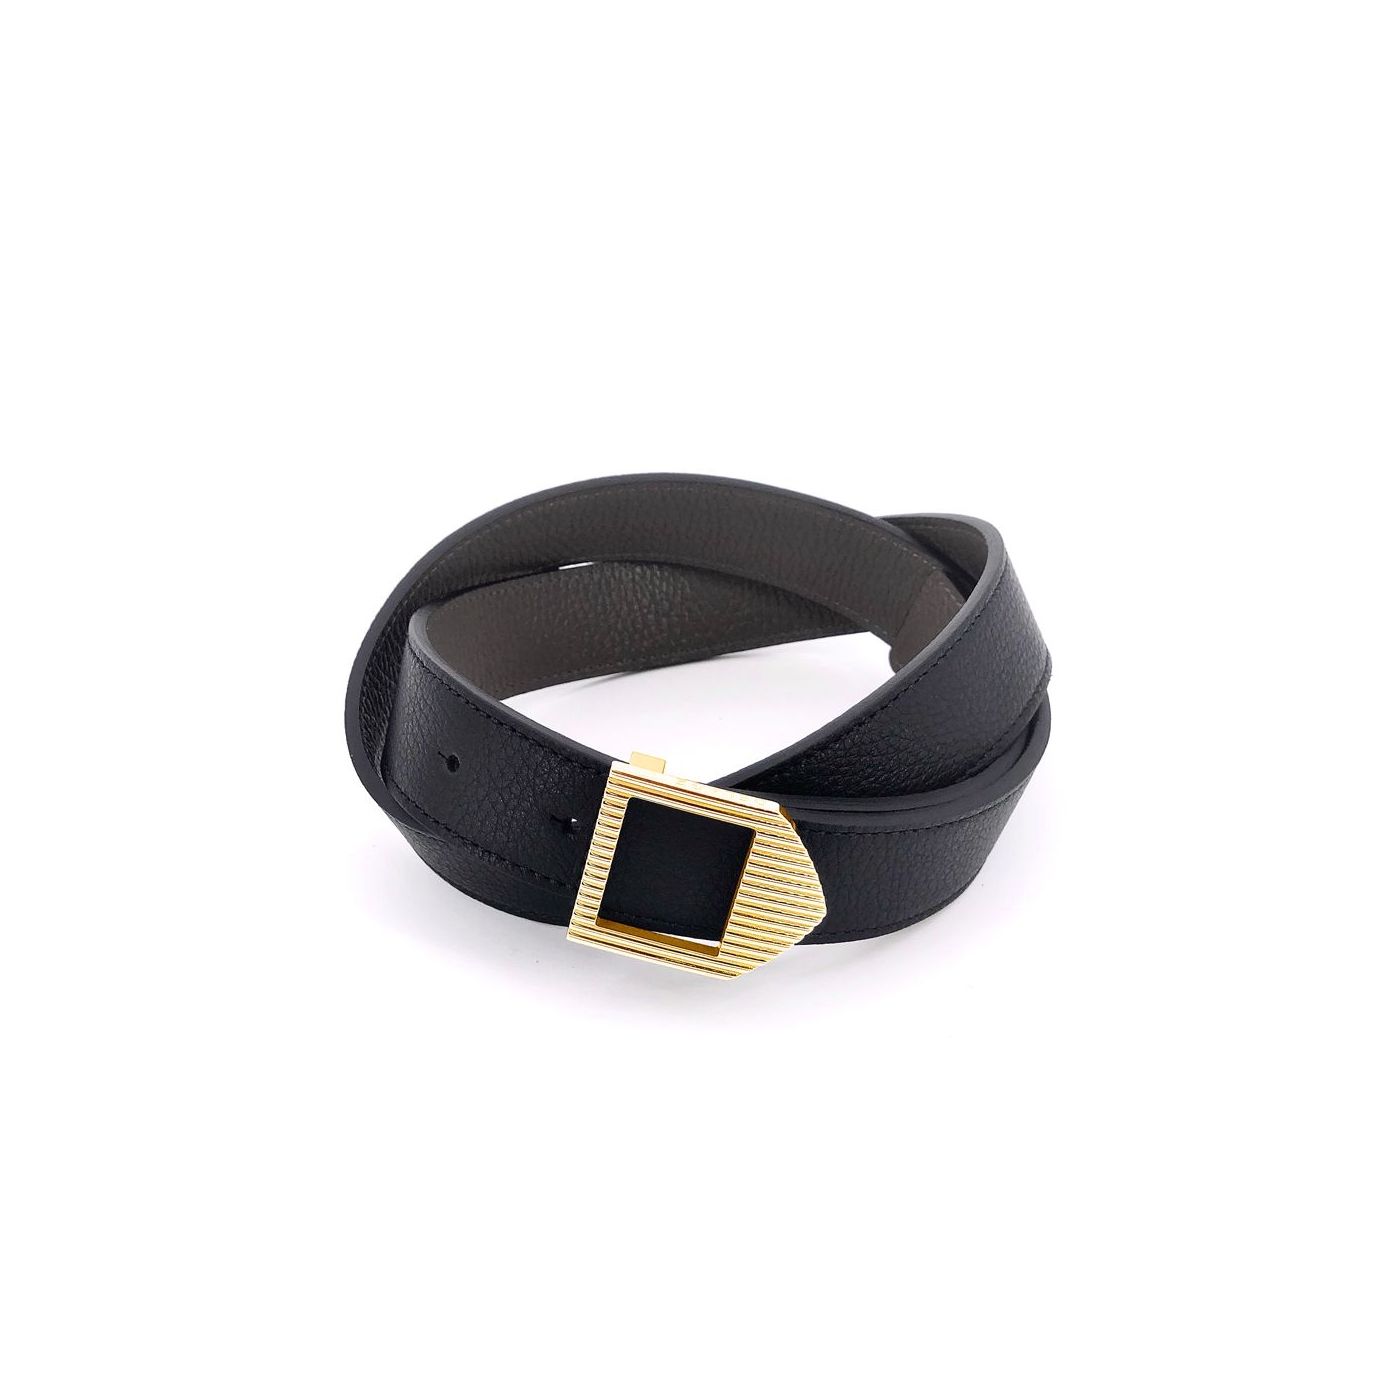 Reversible leather belt black & grey / gold buckle